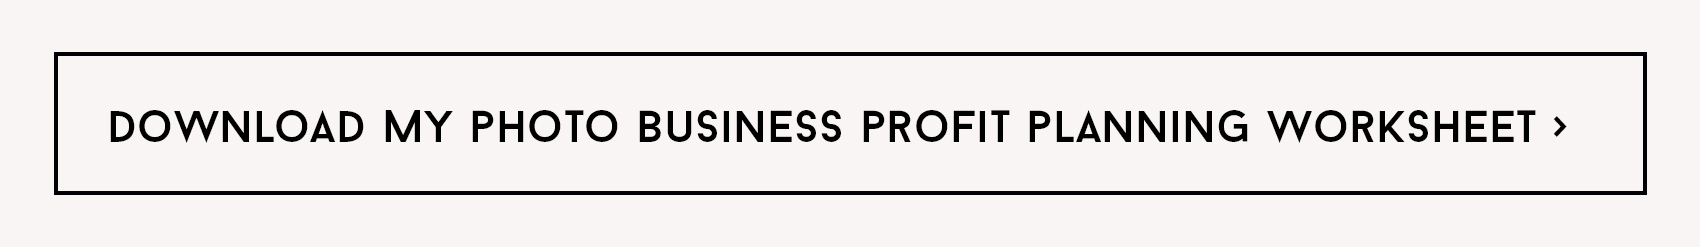 download my photo business profit planning worksheet